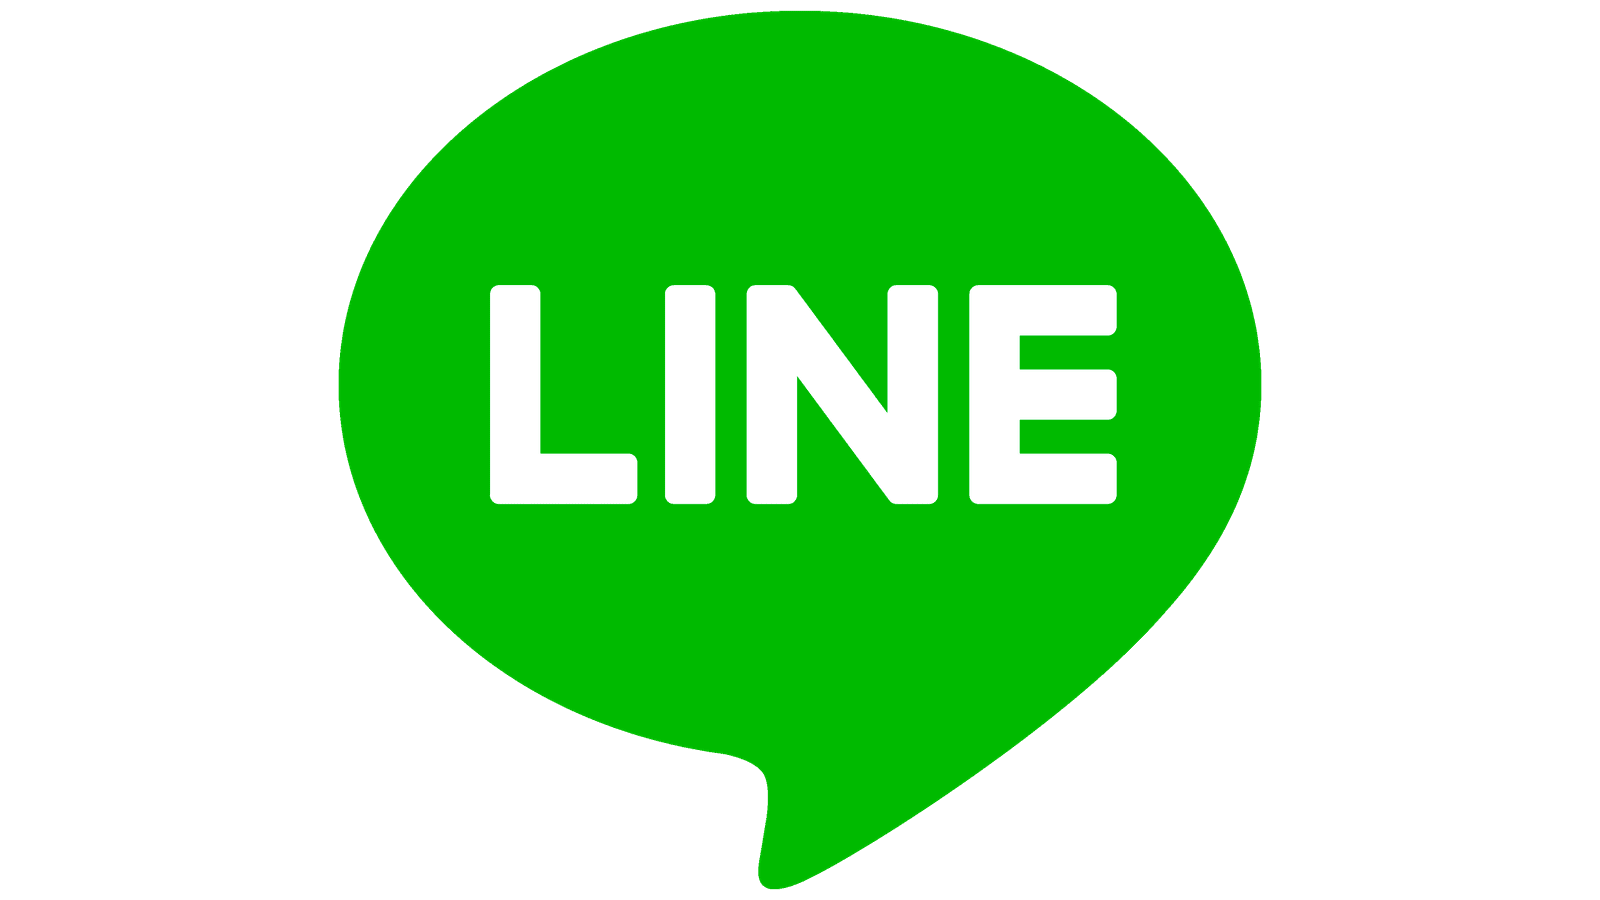 Line logo image